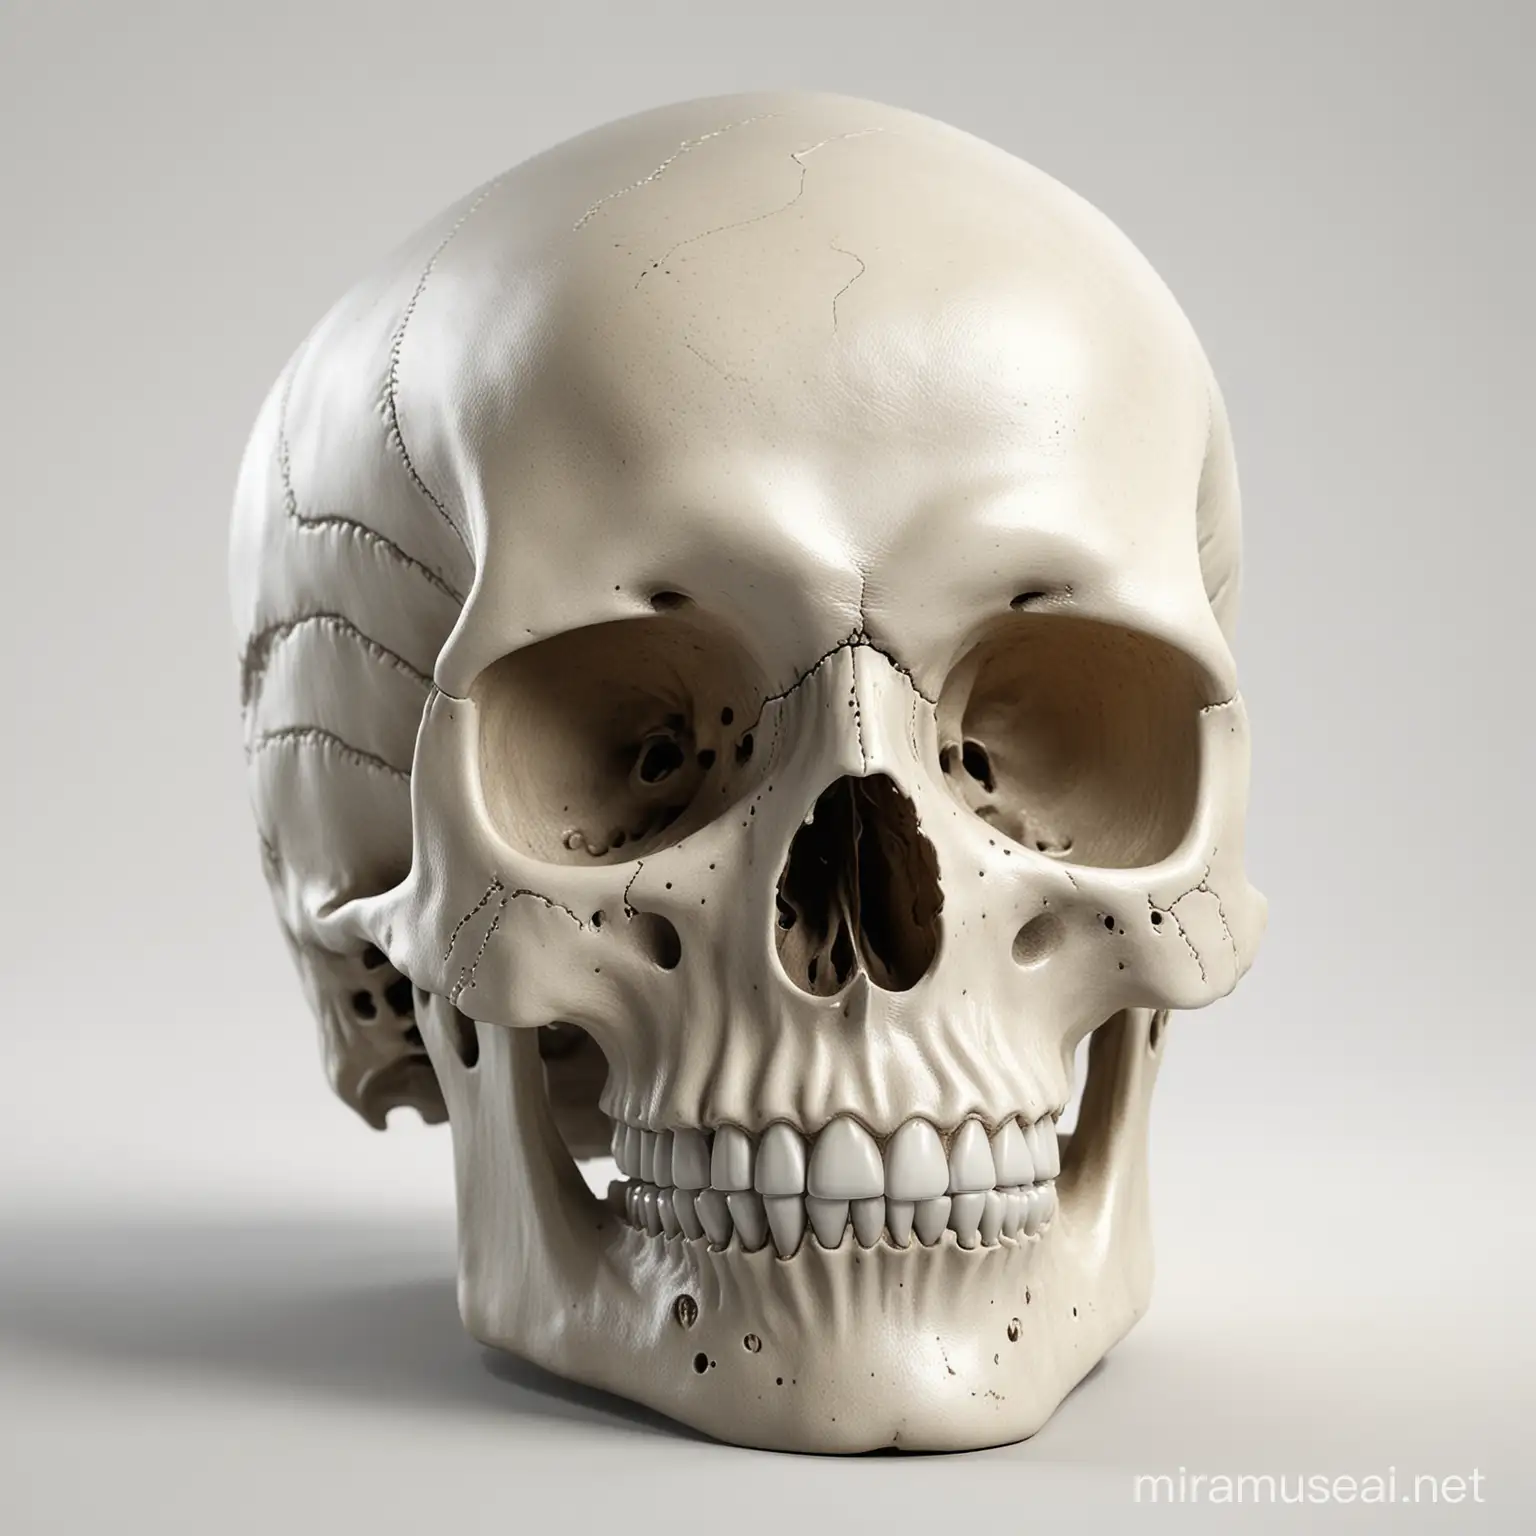 Realistic Skull on White Background